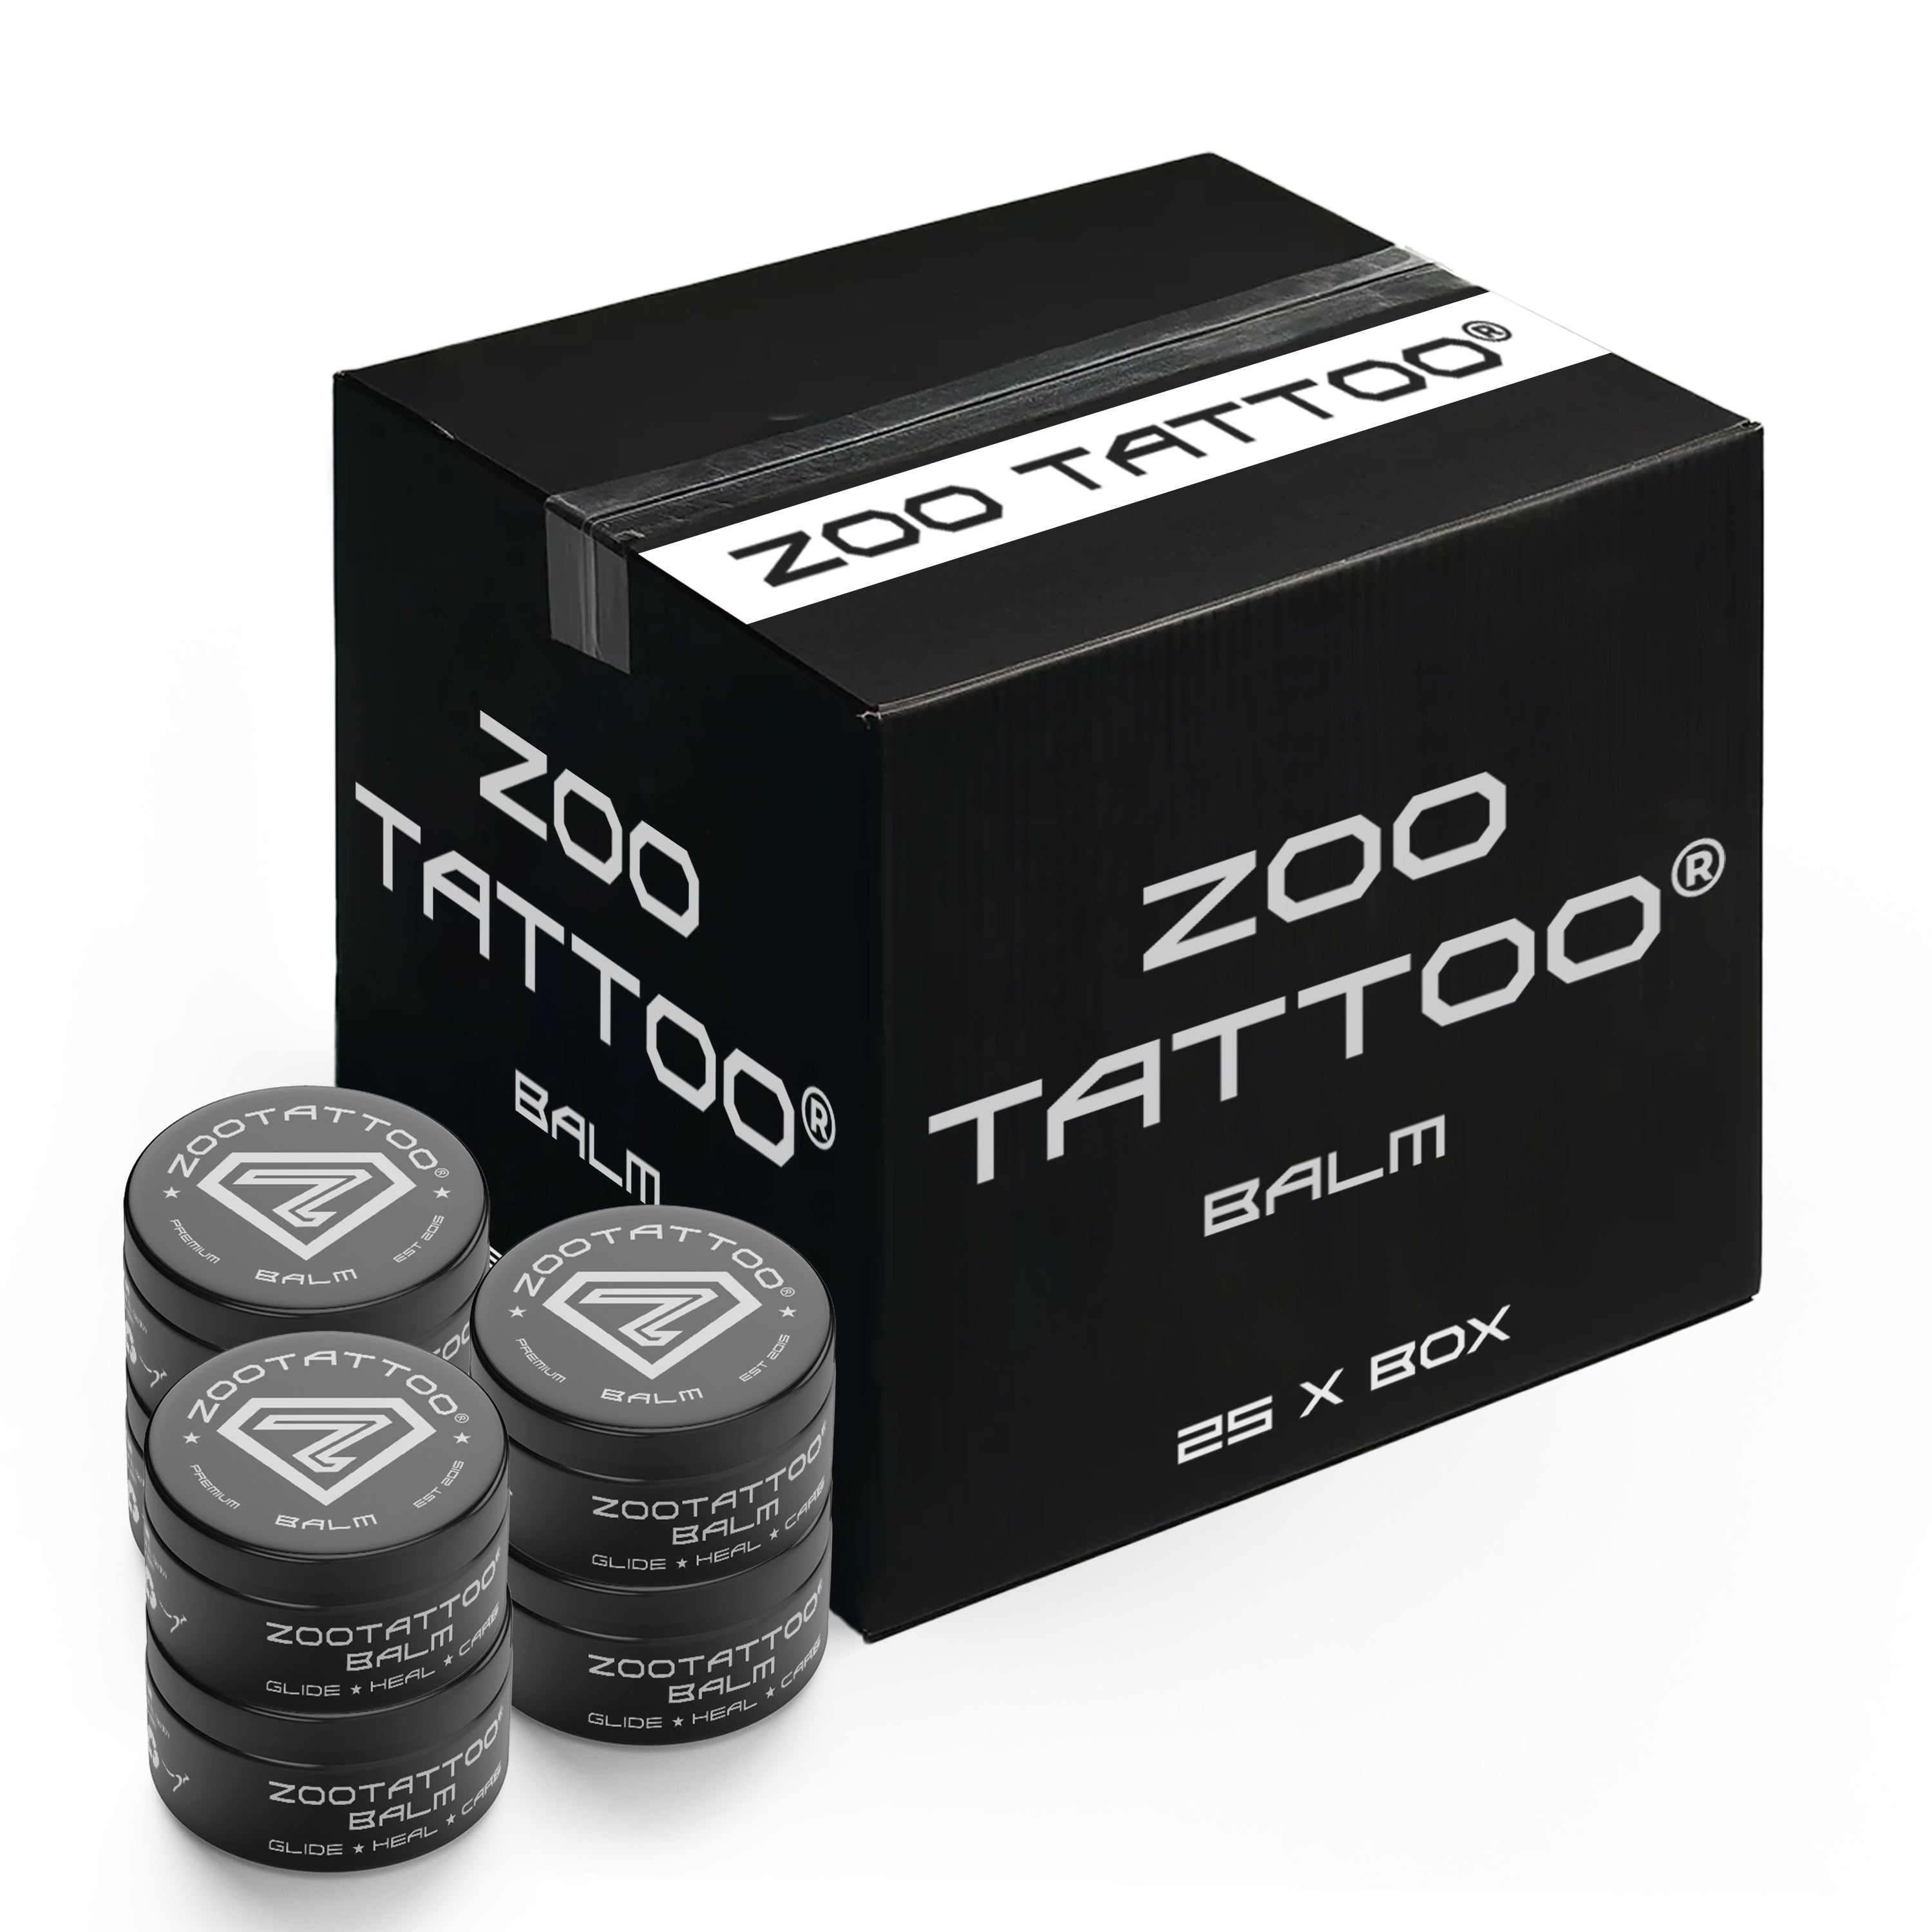 ZOOTATTOO® Balm 100ml Wholesale 25 Box